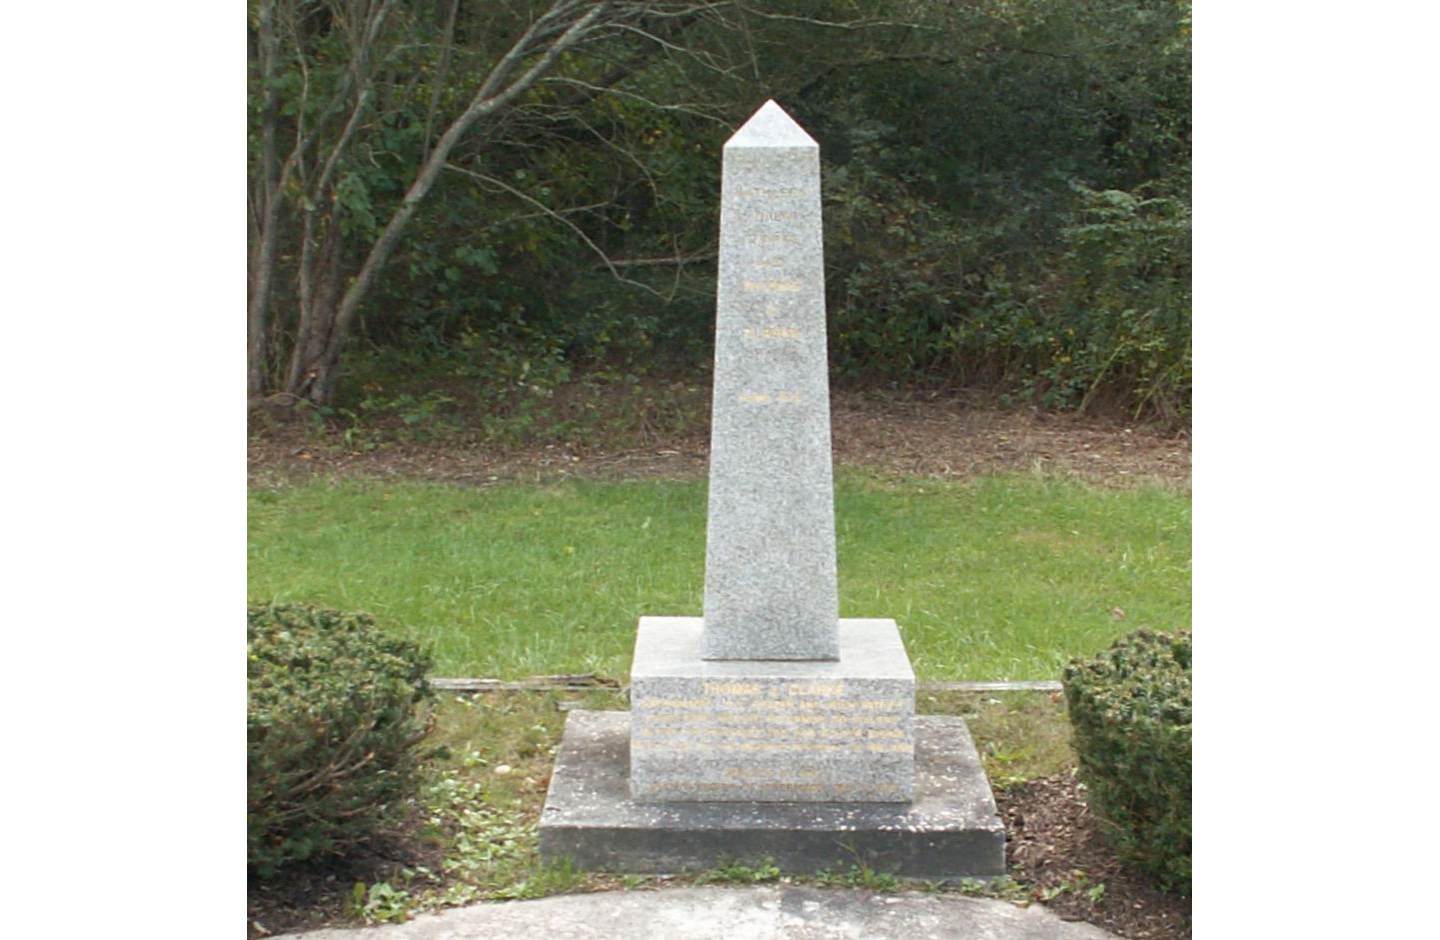 Tom Clarke Monument in Manorville, NY.